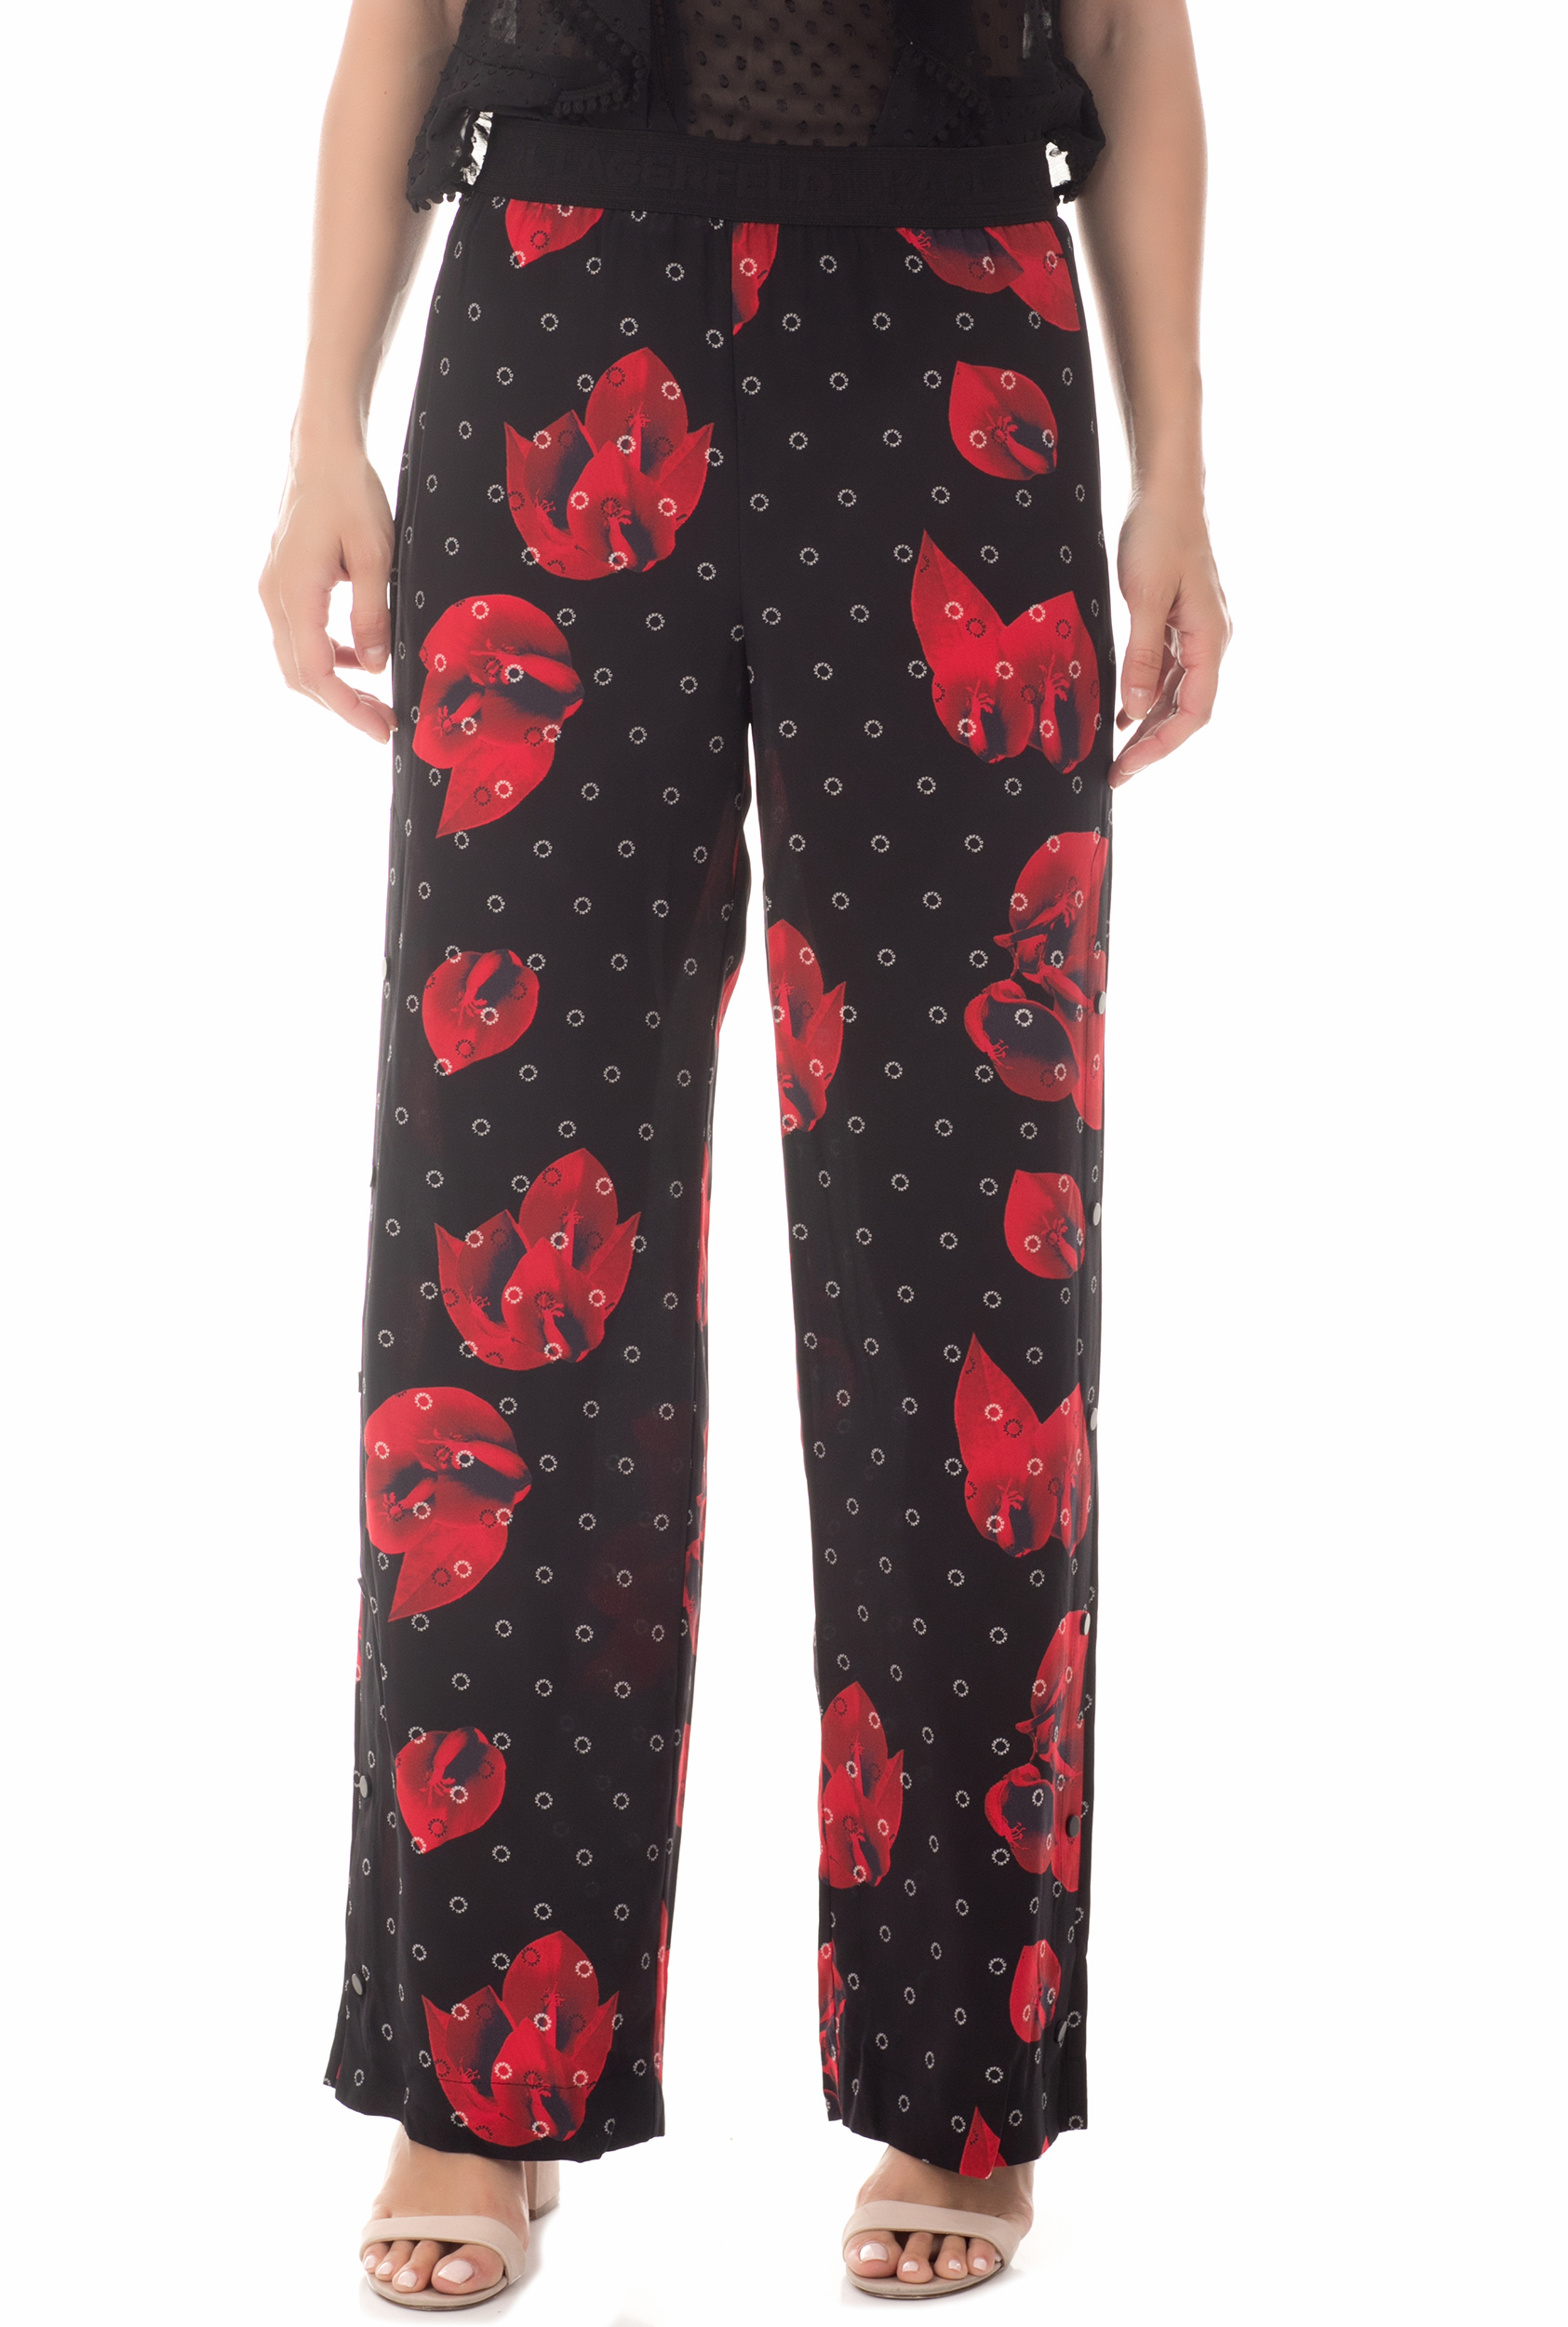 KARL LAGERFELD - Γυναικεία παντελόνα KARL LAGERFELD Flower μαύρη Γυναικεία/Ρούχα/Παντελόνια/Παντελόνες